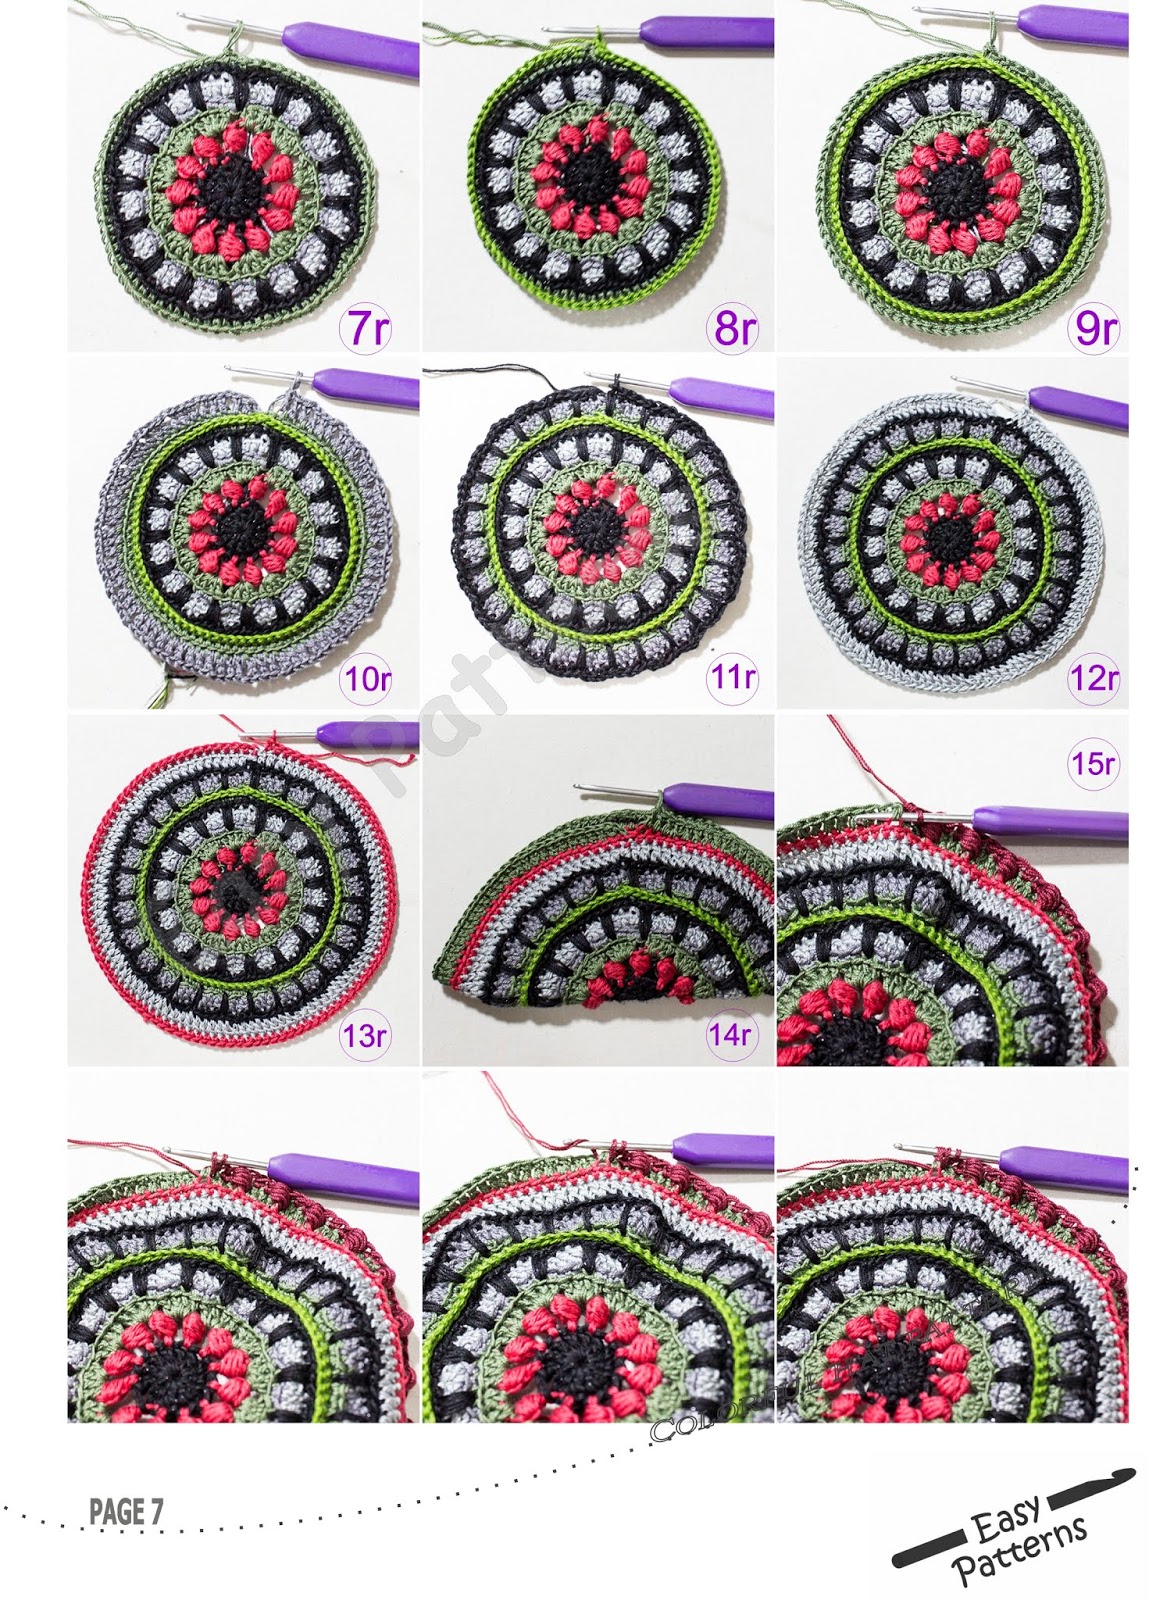 Nadia Easy Patterns: The crochet hat pattern Pattern #37